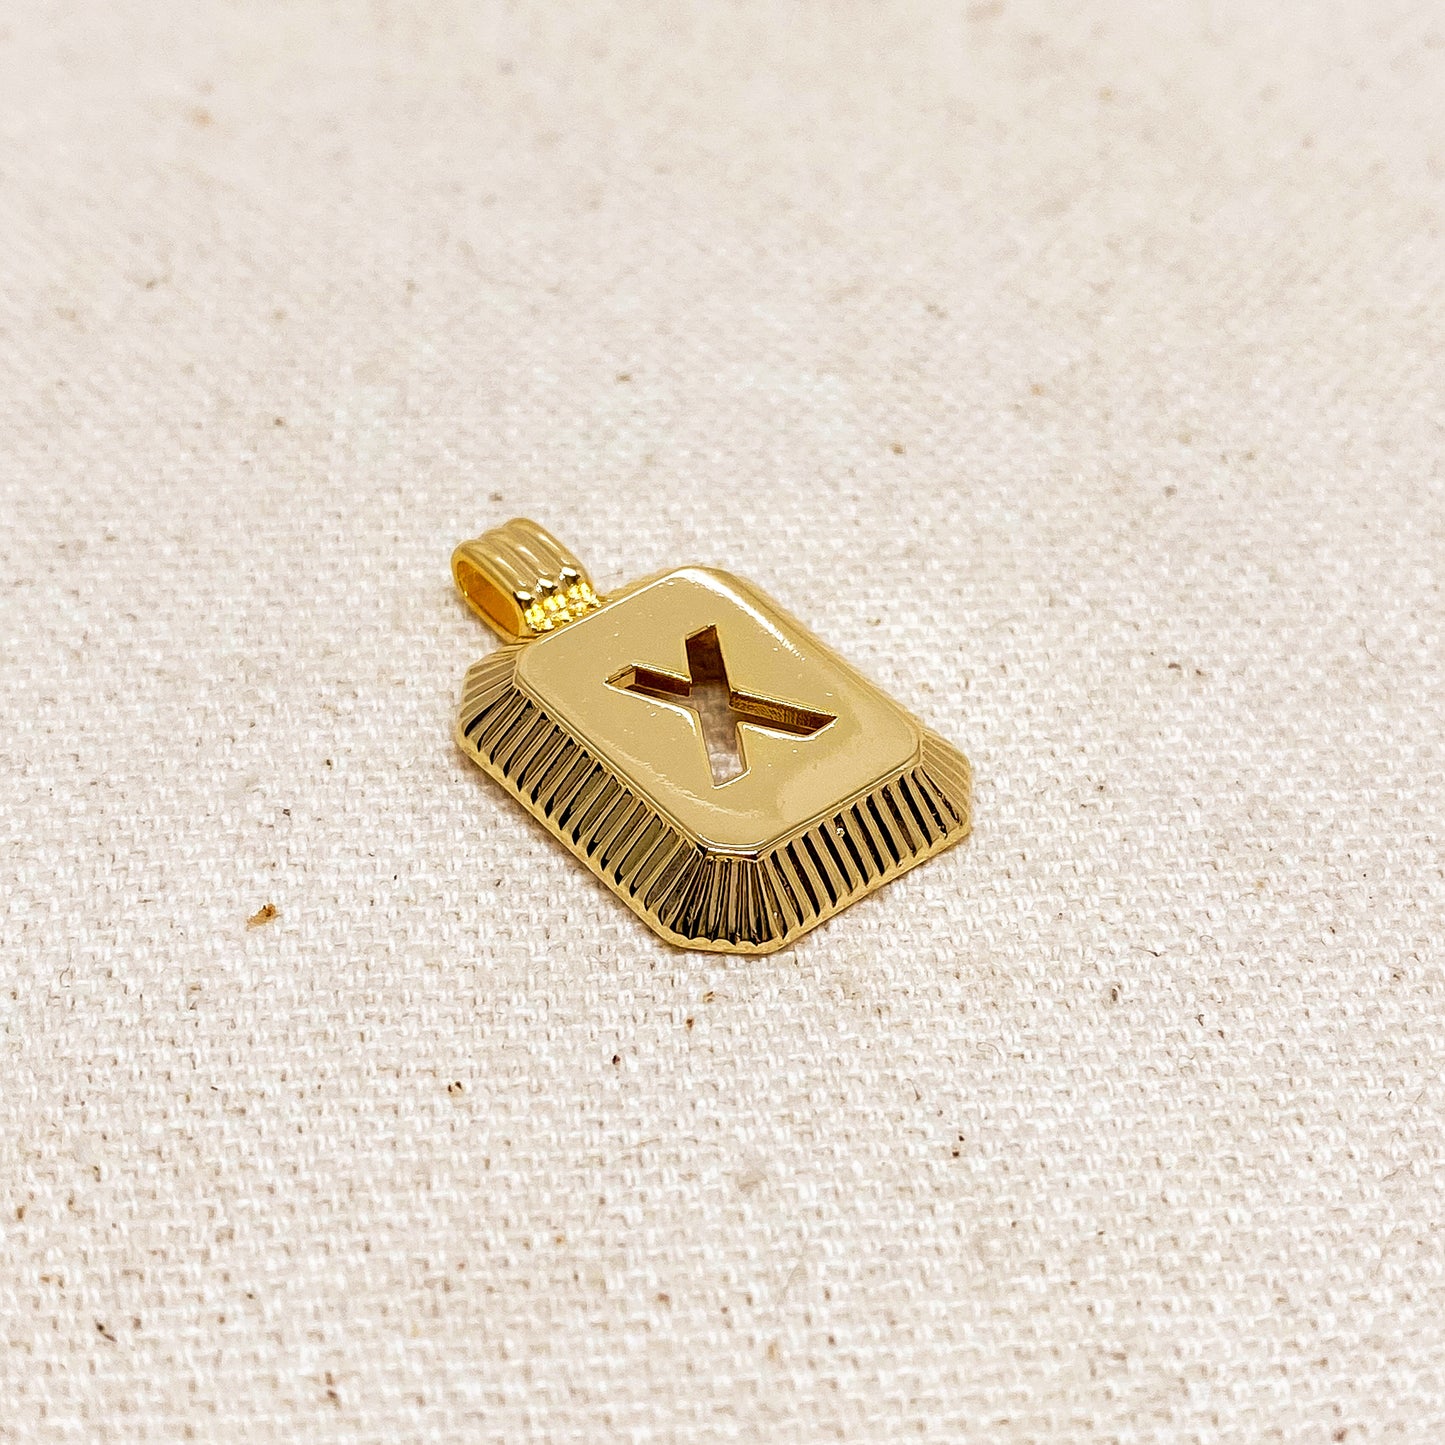 GoldFi 18k Gold Filled Initial Plate Pendant Letter X